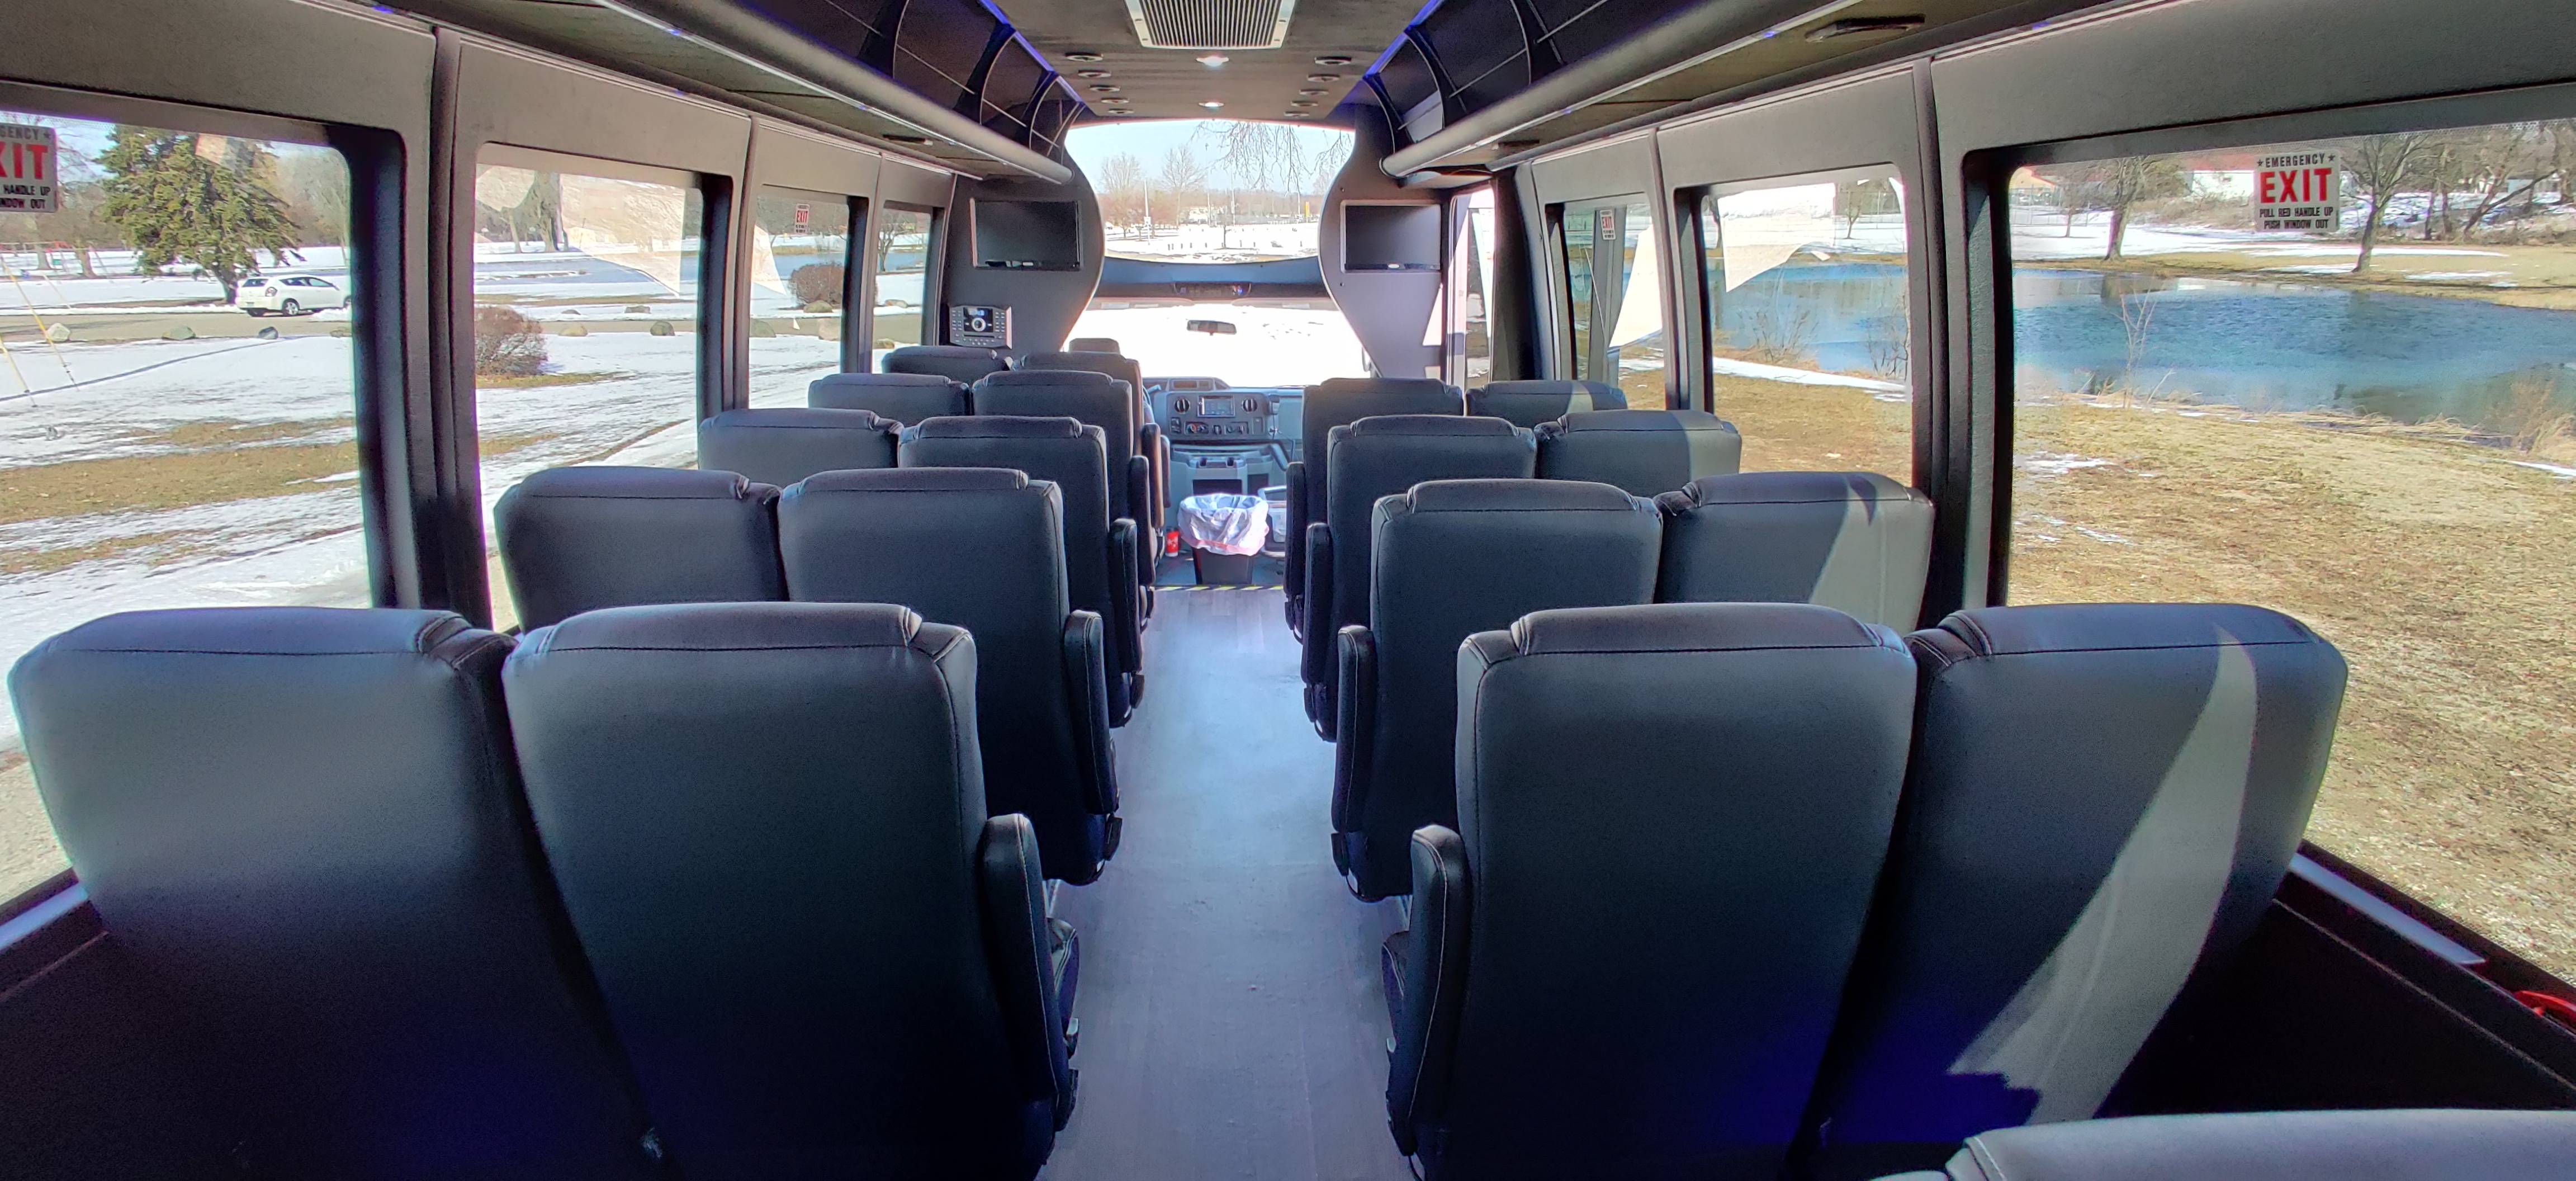 26 Passenger Executive Shuttle Bus Interior 3